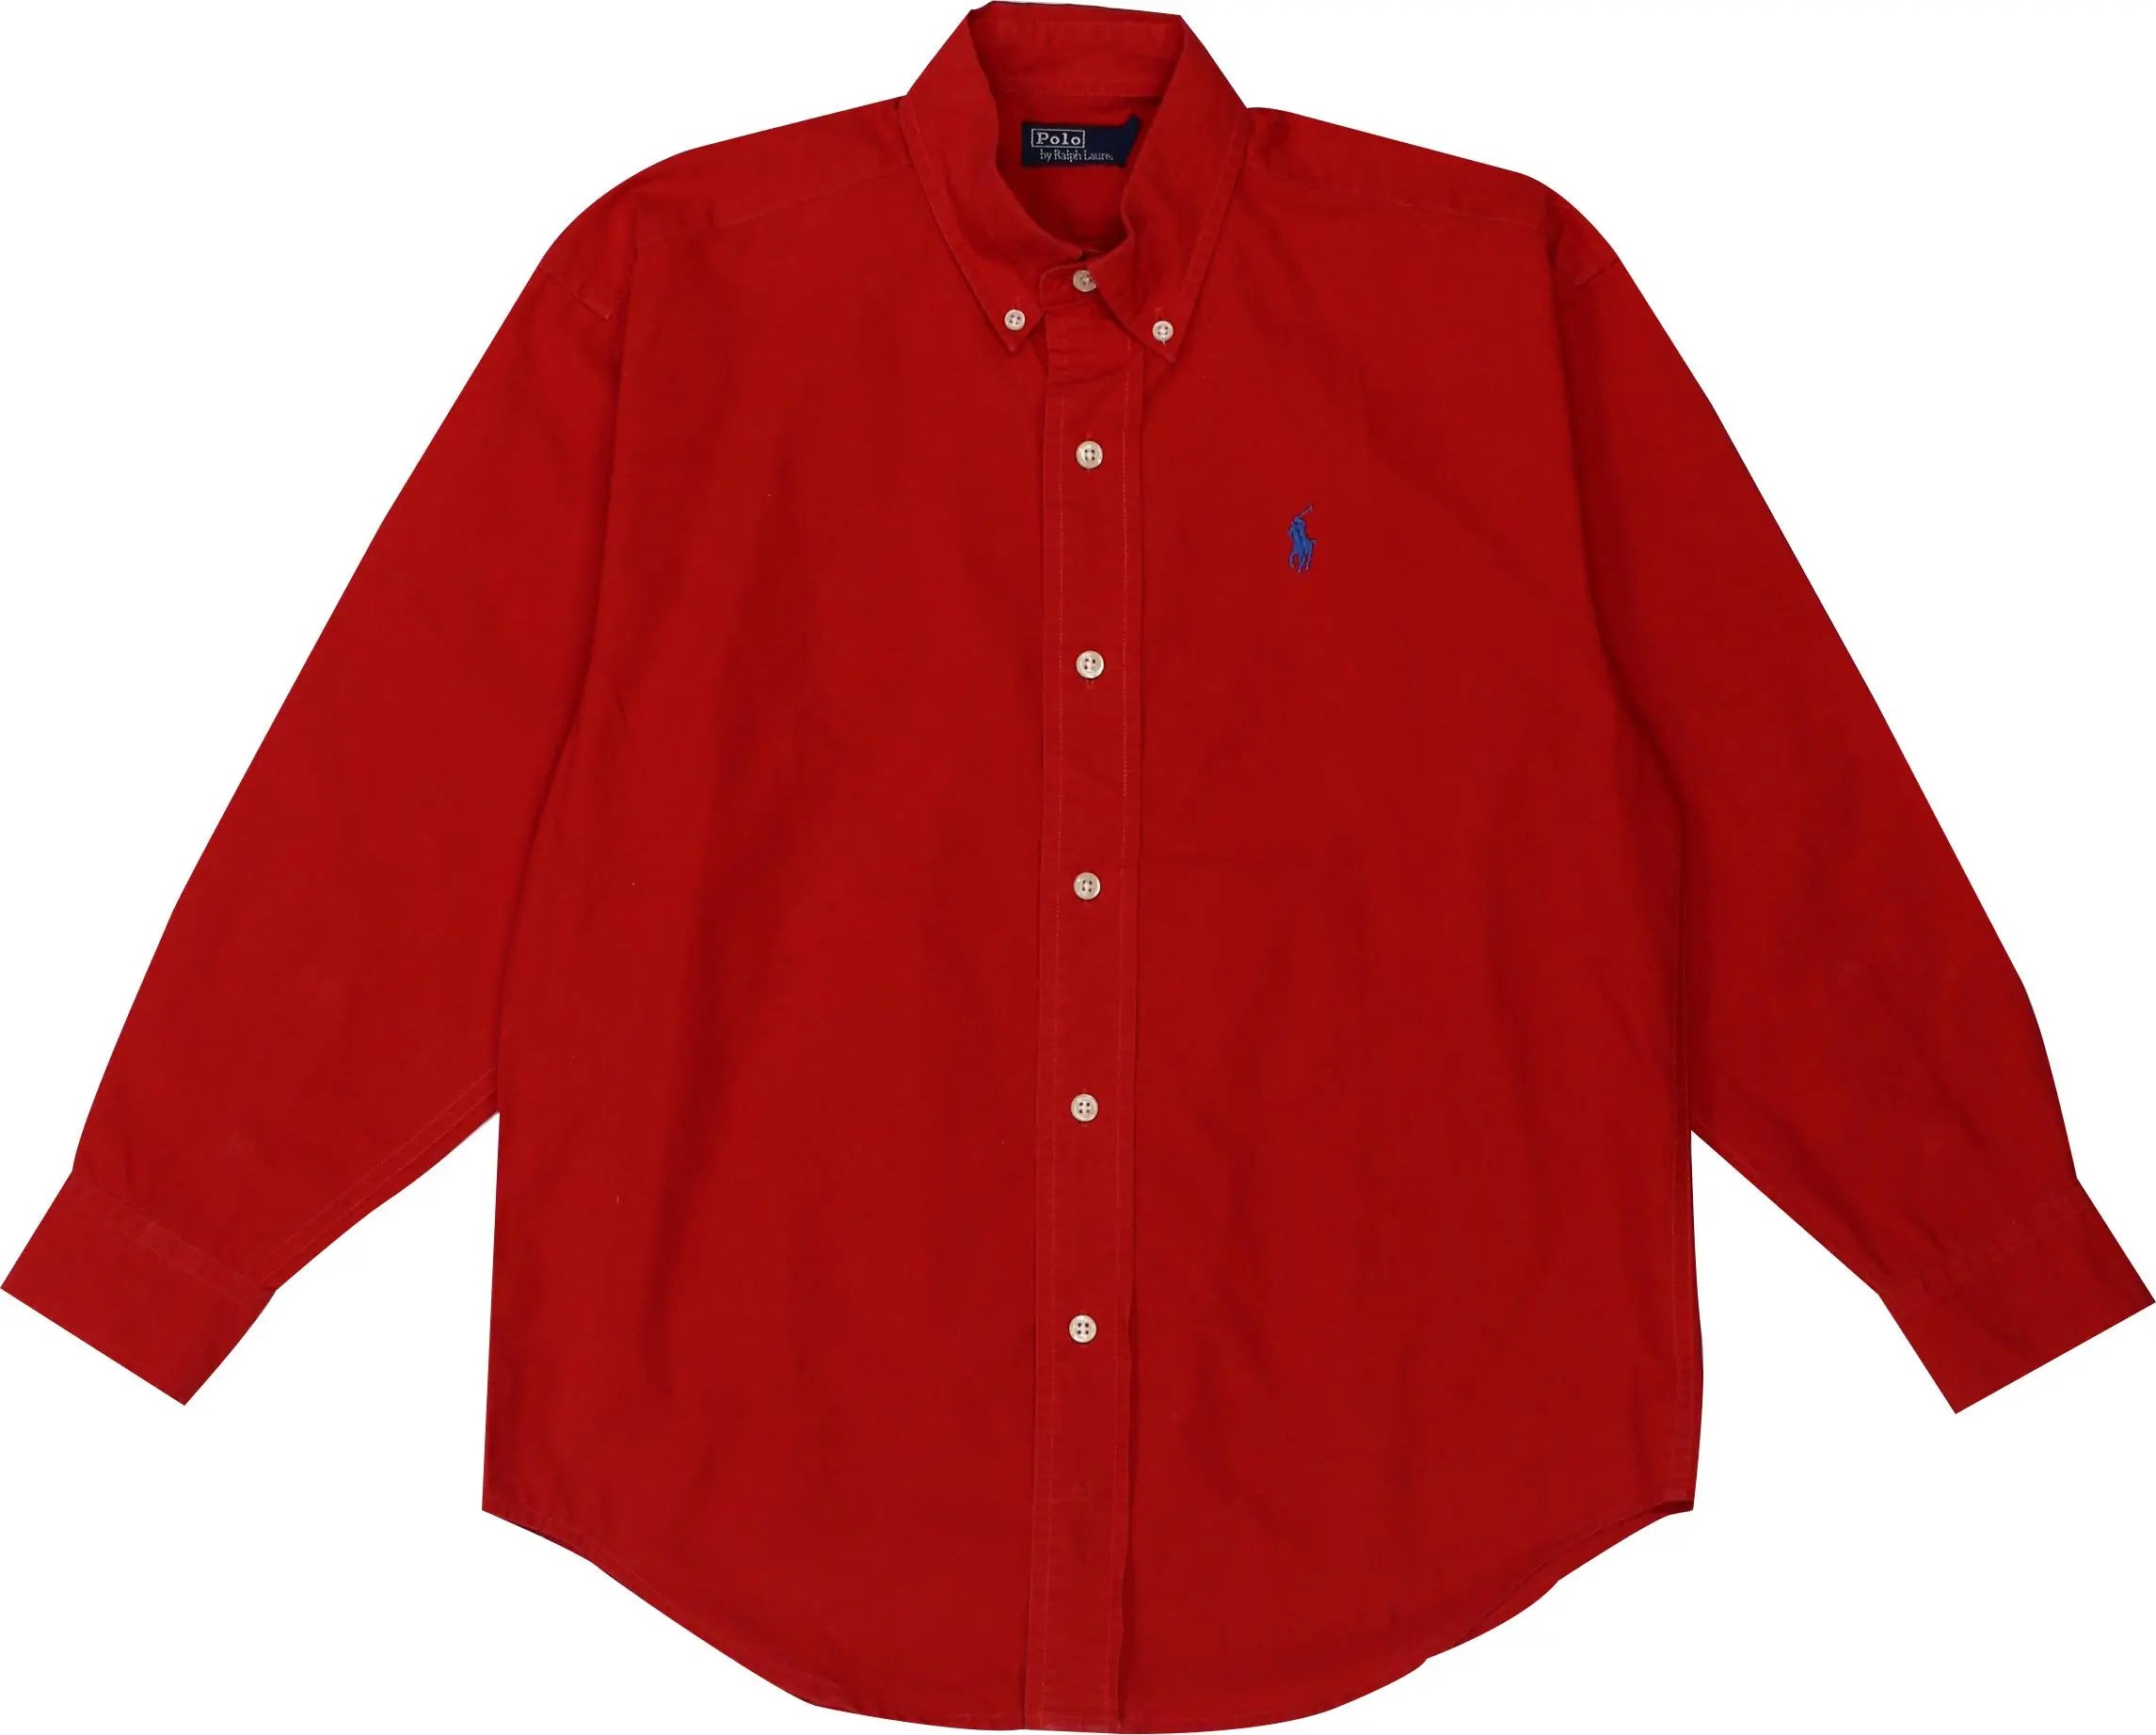 Ralph Lauren - Red Shirt by Ralph Lauren- ThriftTale.com - Vintage and second handclothing